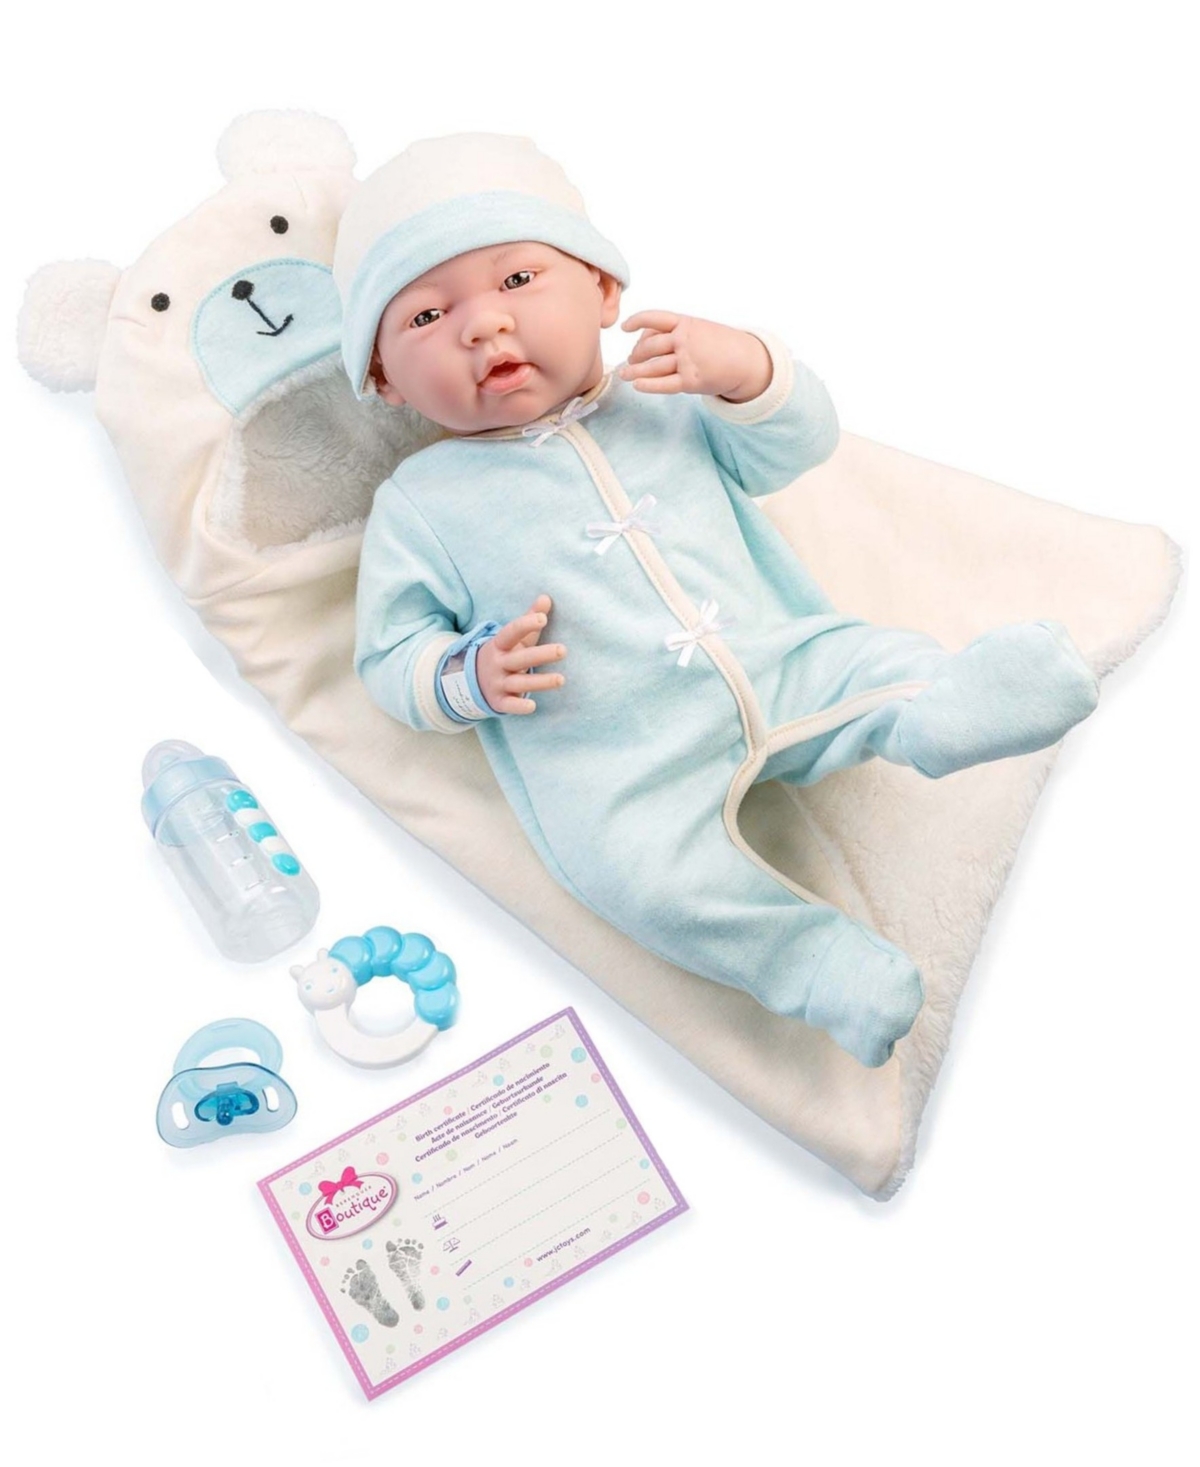 Jc Toys La Newborn Nursery 15.5" Baby Doll Bunting Bear Gift Set, 9 Pieces In Baby Blue